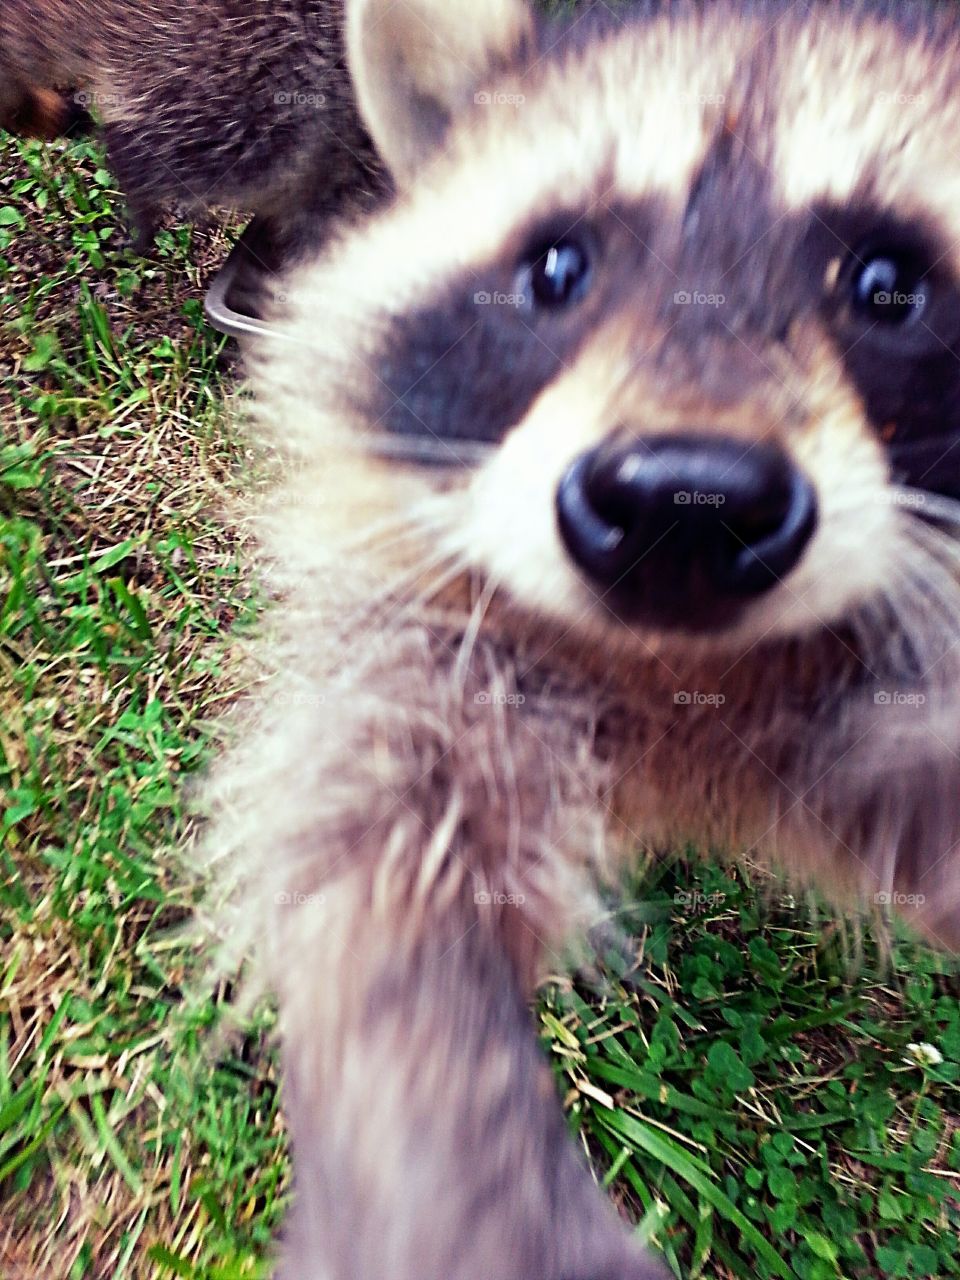 A raccoon reaches to hug the camera.